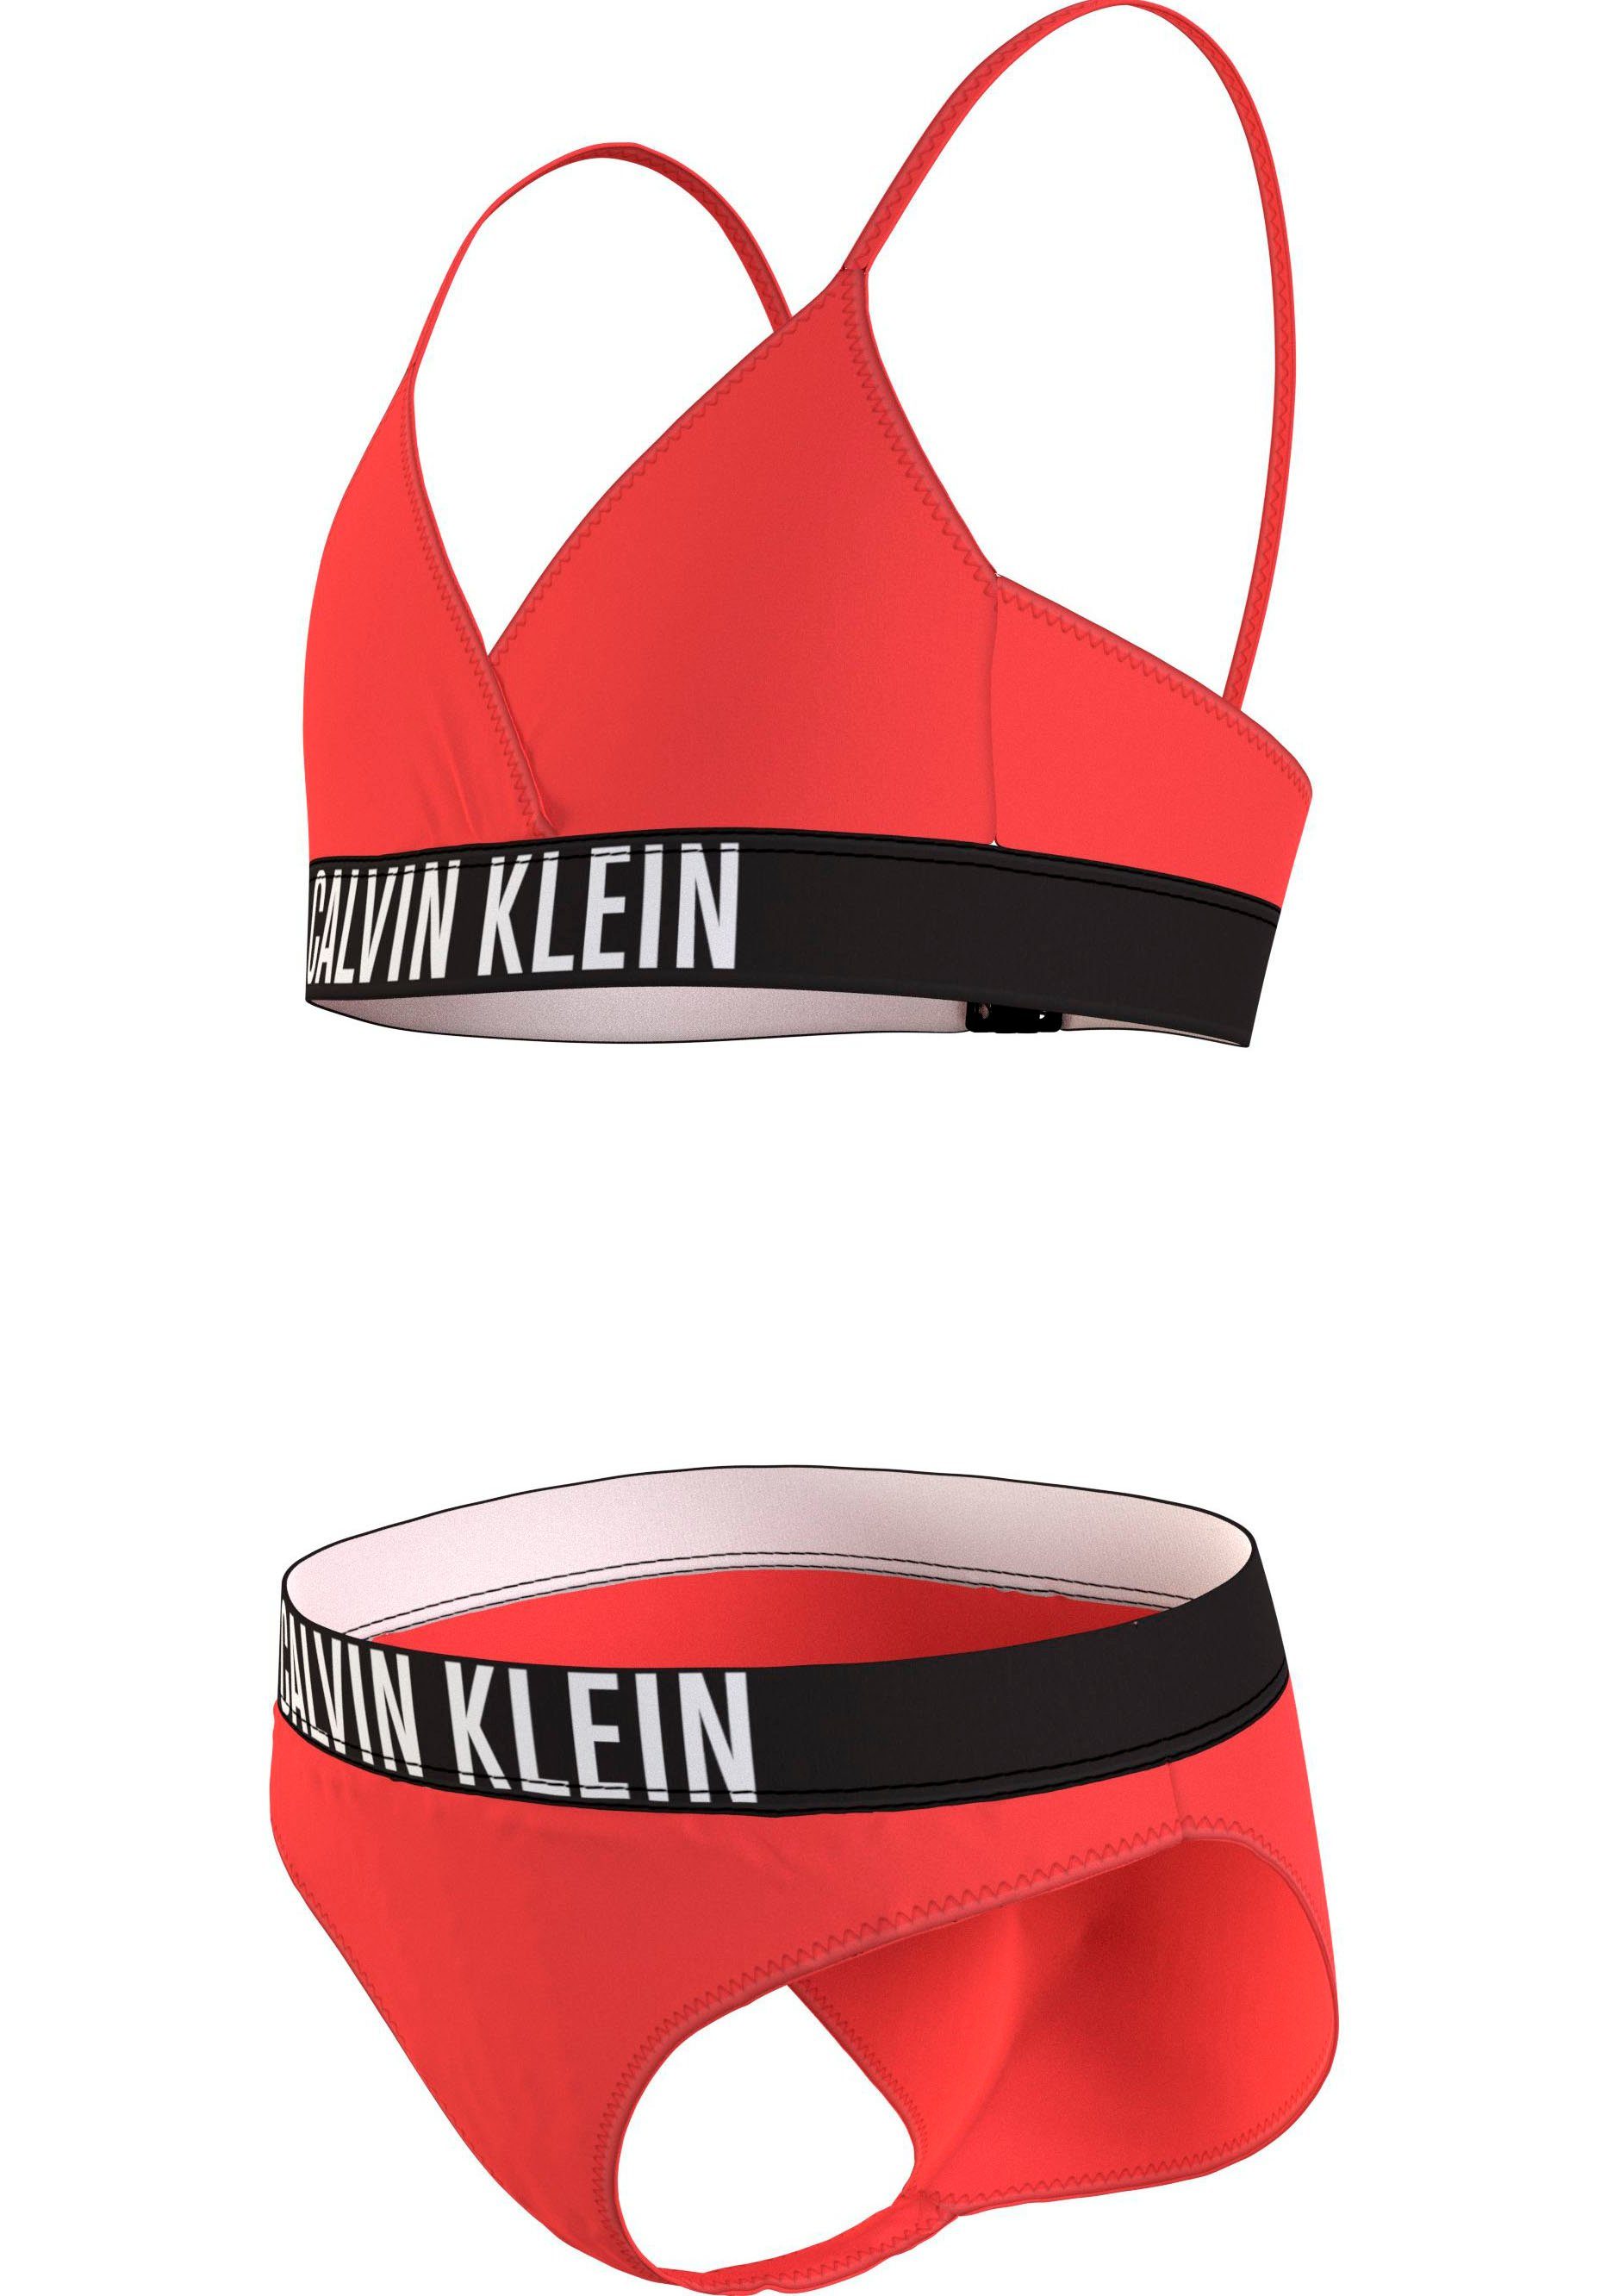 BIKINI CROSSOVER Optik SET Swimwear TRIANGLE in unifarbener Calvin Klein Triangel-Bikini